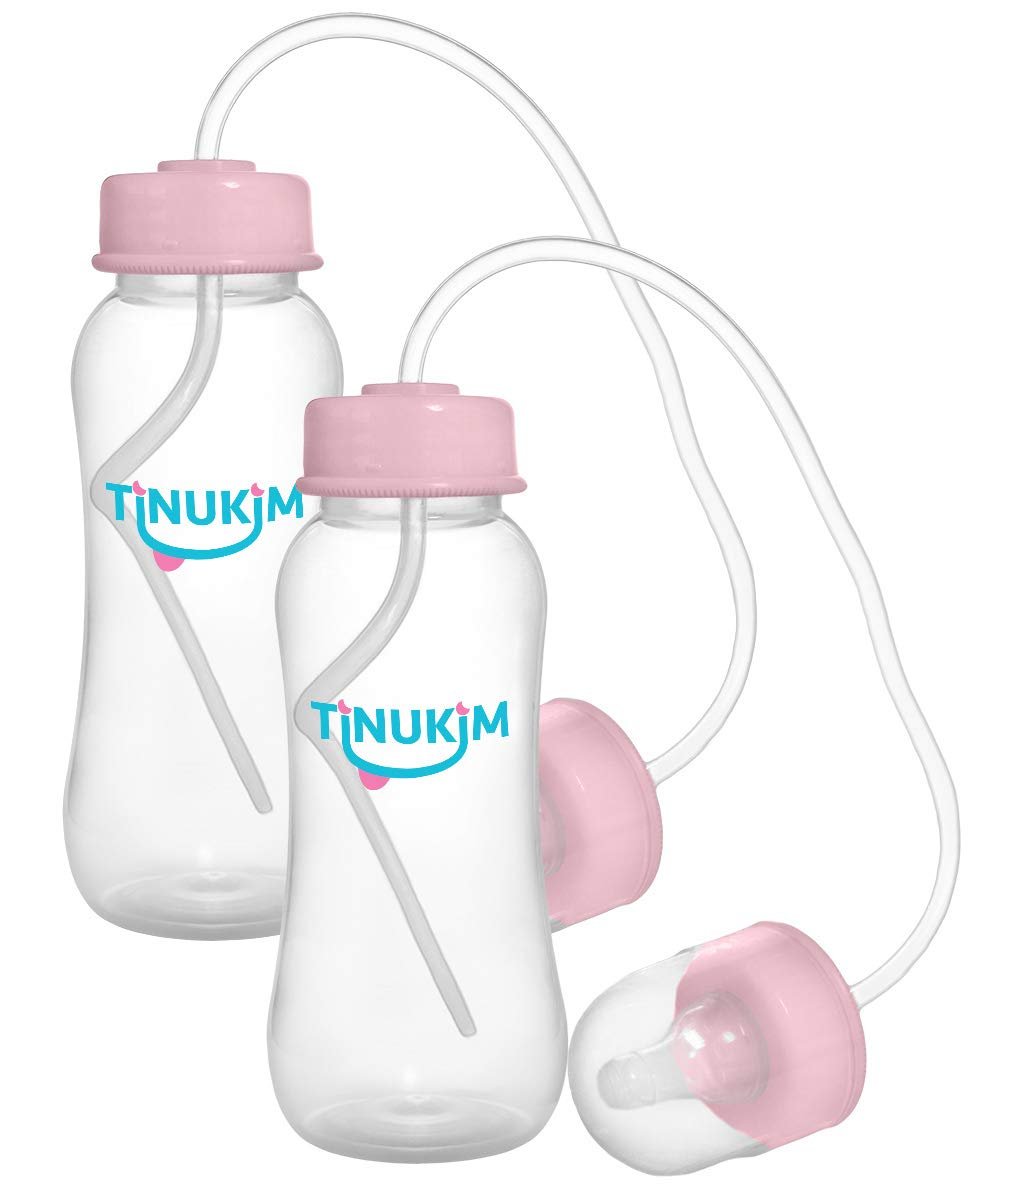 Tinukim iFeed Self-Feeding Baby Bottle Pink 9oz - Anti-Colic Nursing System, 2-Pack